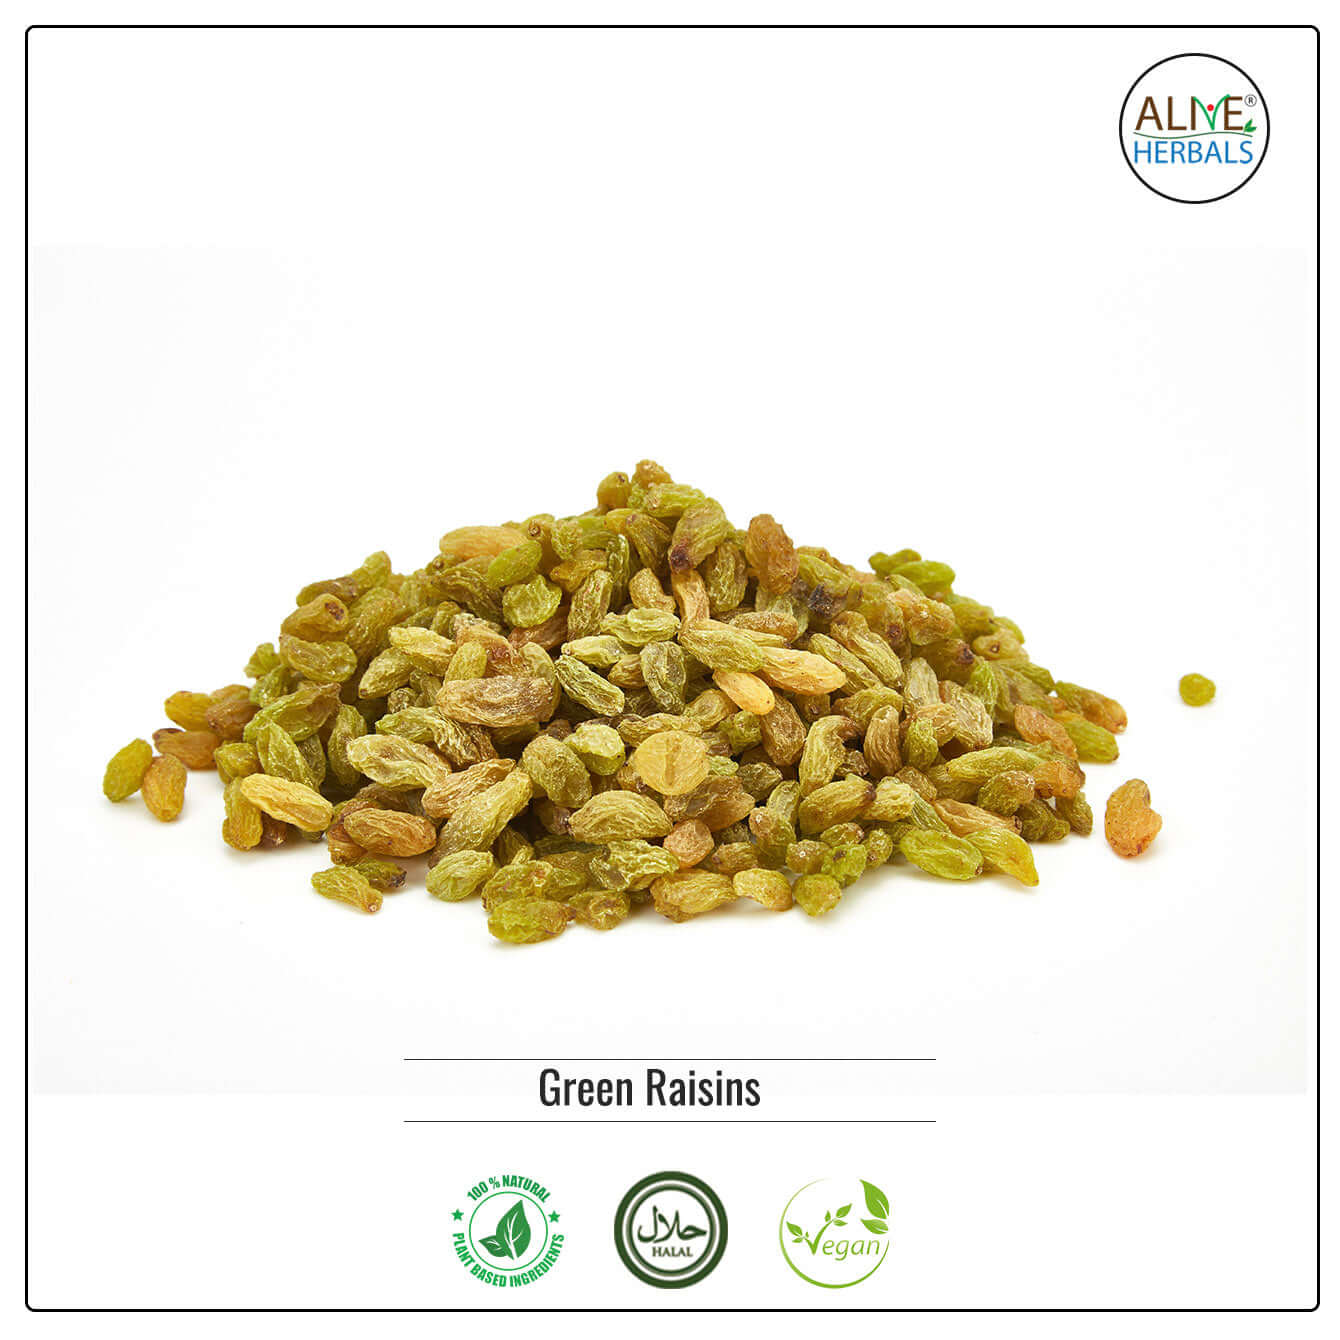 Green Raisins - Buy at Natural Food Store | Alive Herbals.